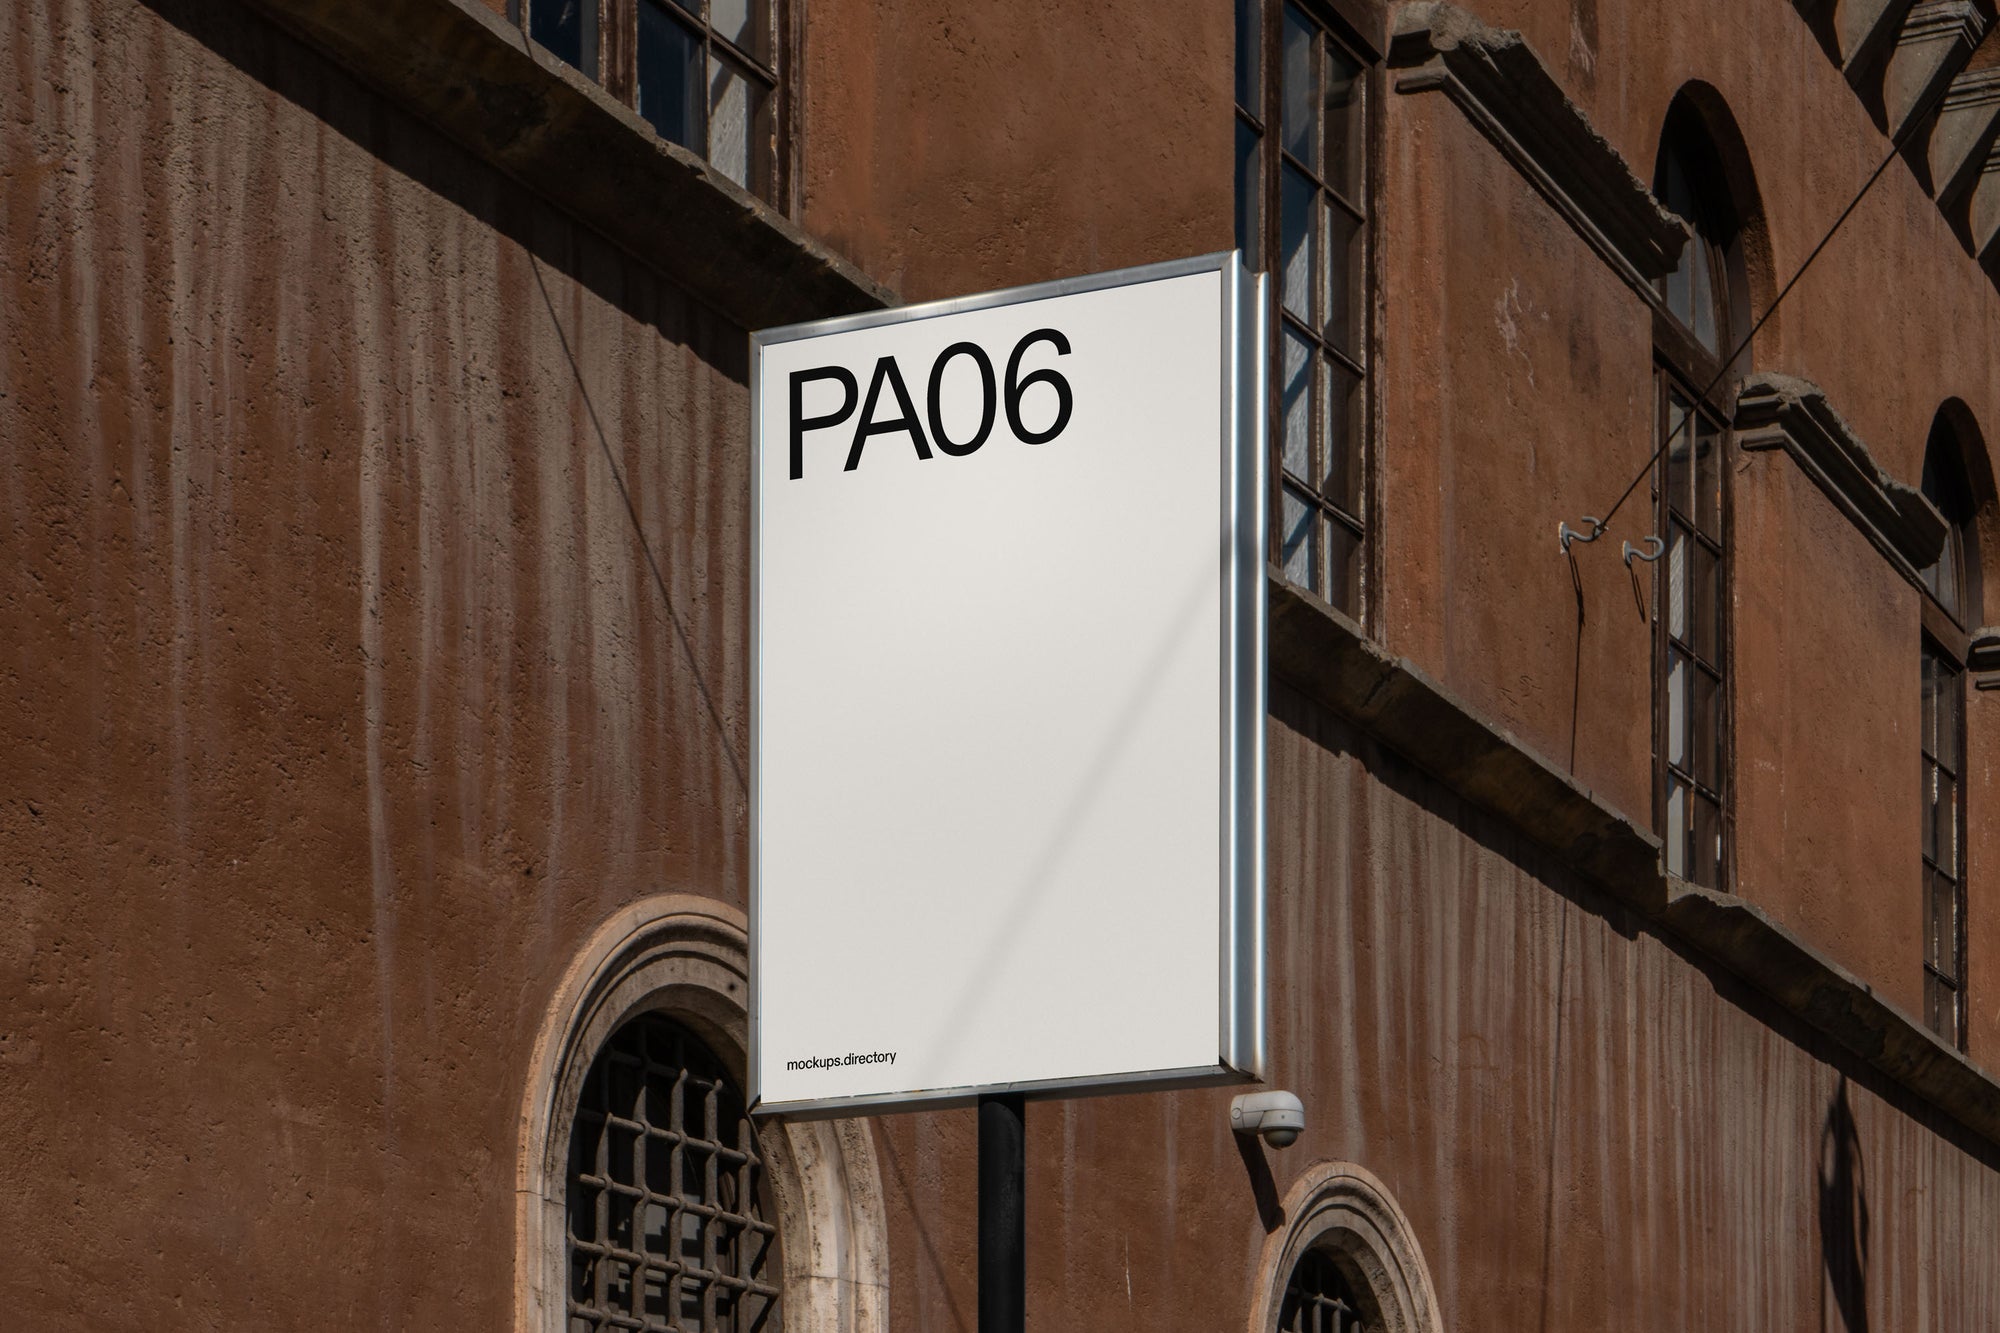 PA06 — Bus Stop Poster